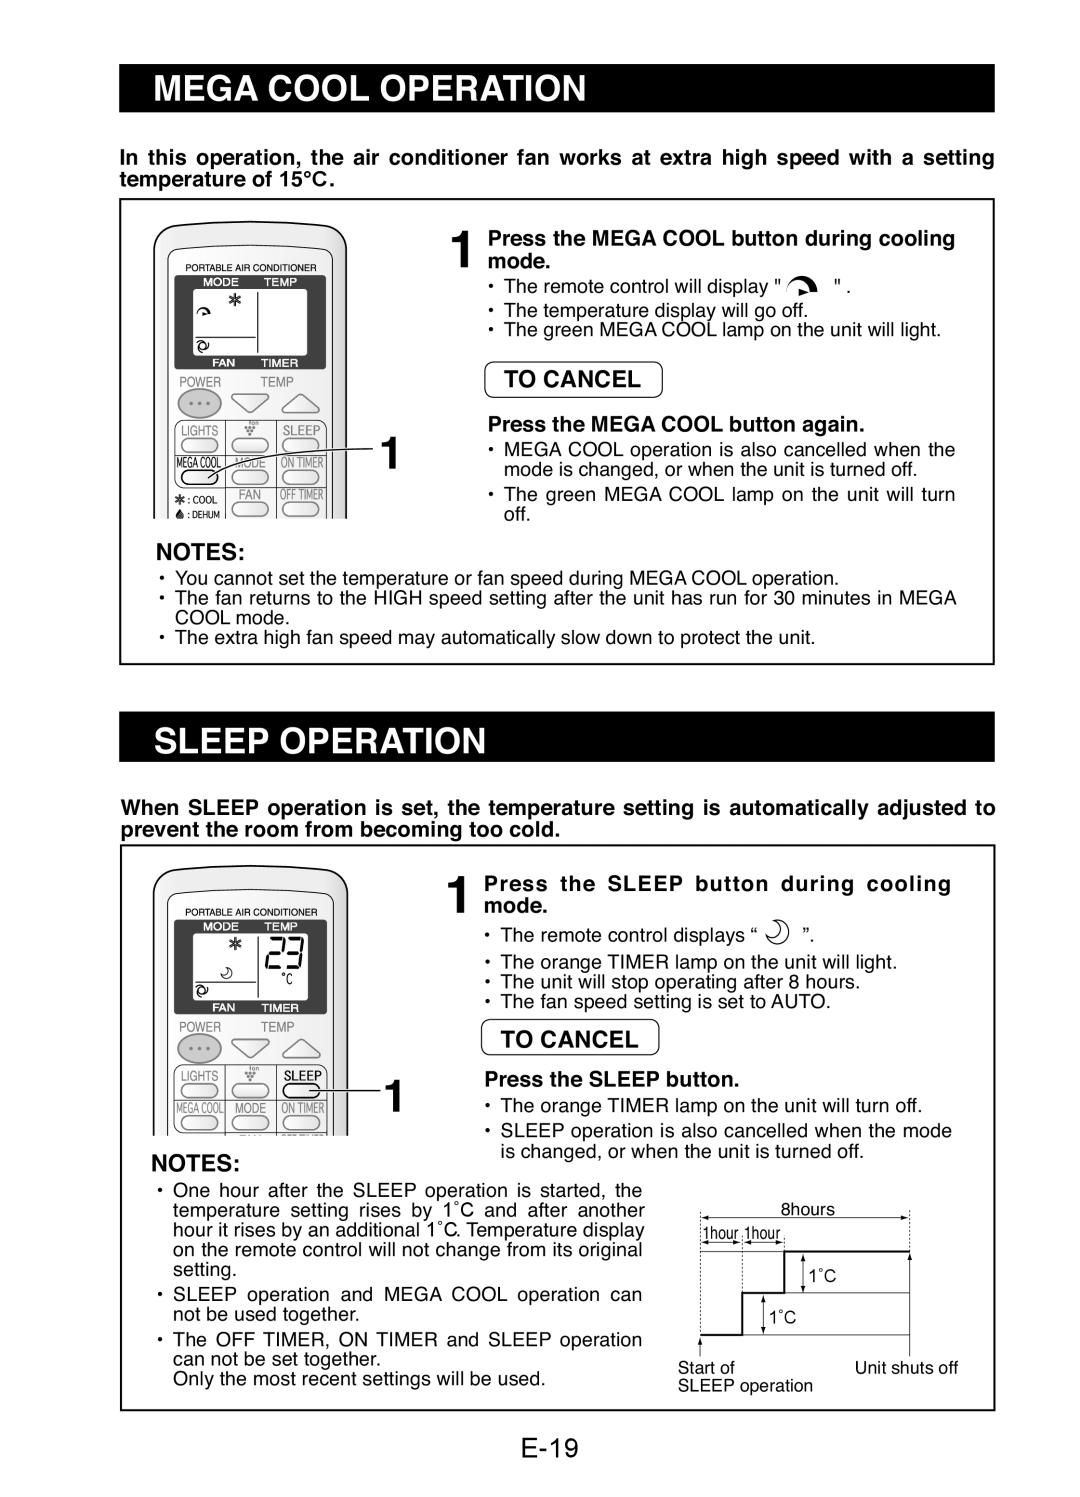 Sharp CV-P13LJ Mega Cool Operation, Sleep Operation, E-19, To Cancel, 1Press the MEGA COOL button during cooling mode 